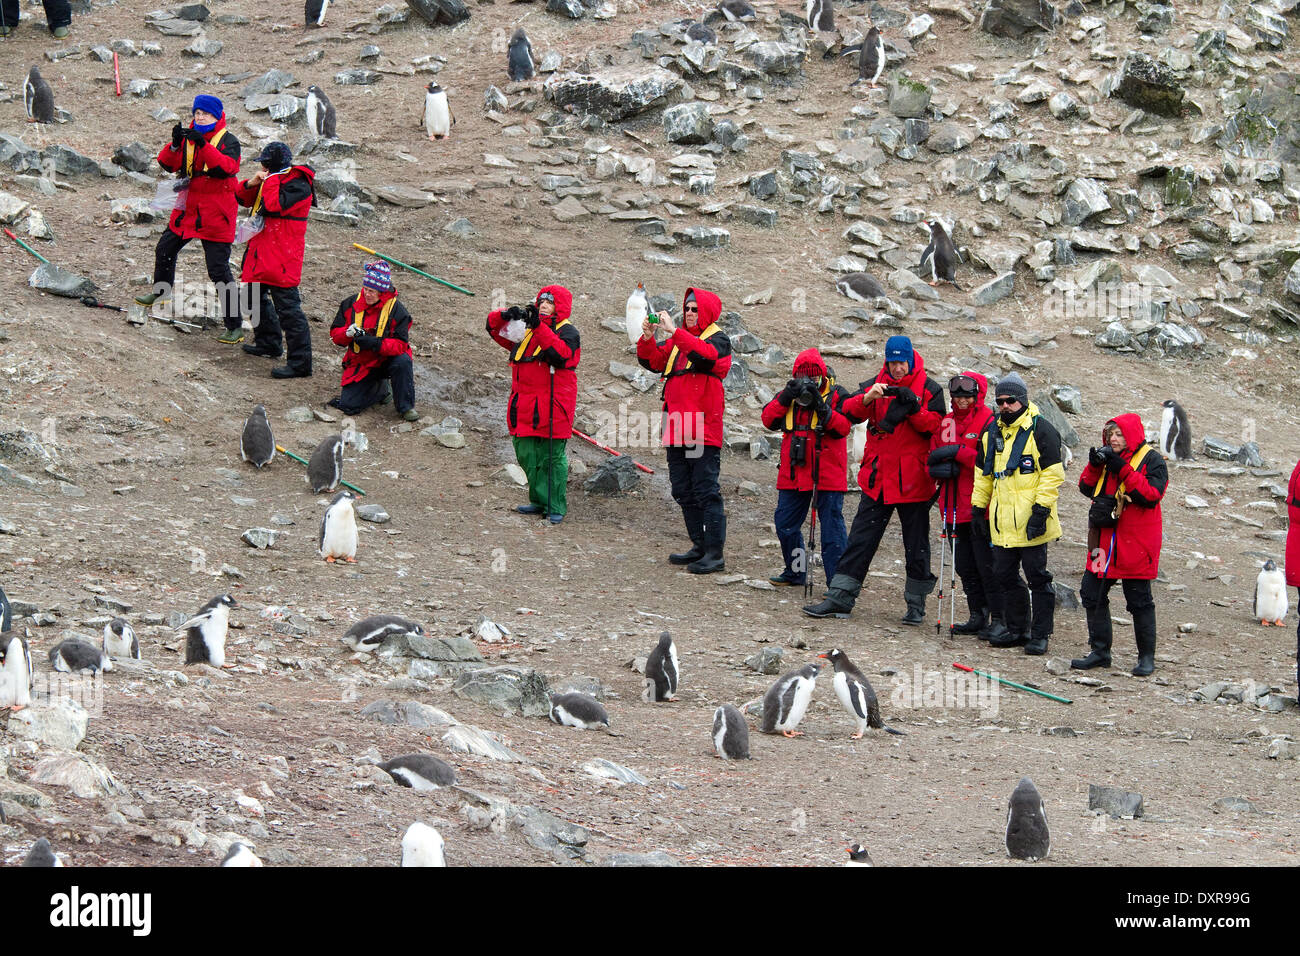 Antarctica tourism, tourists and penguin, penguins among the Antarctica landscape. Stock Photo